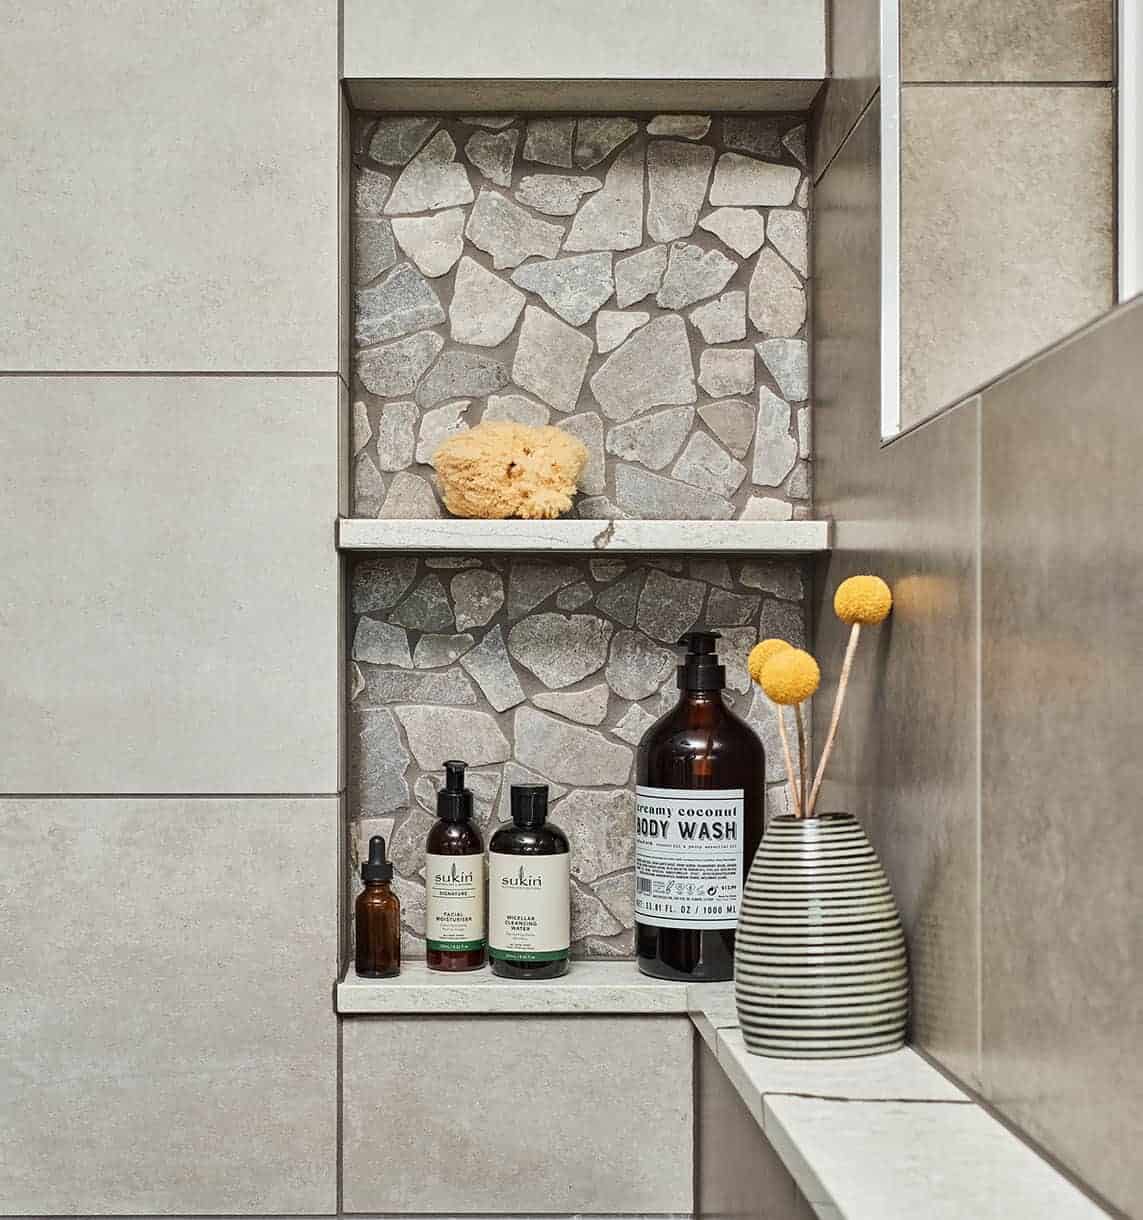 A stone tile shower niche bottom shelf that extends as a ledge around a shower perimeter.